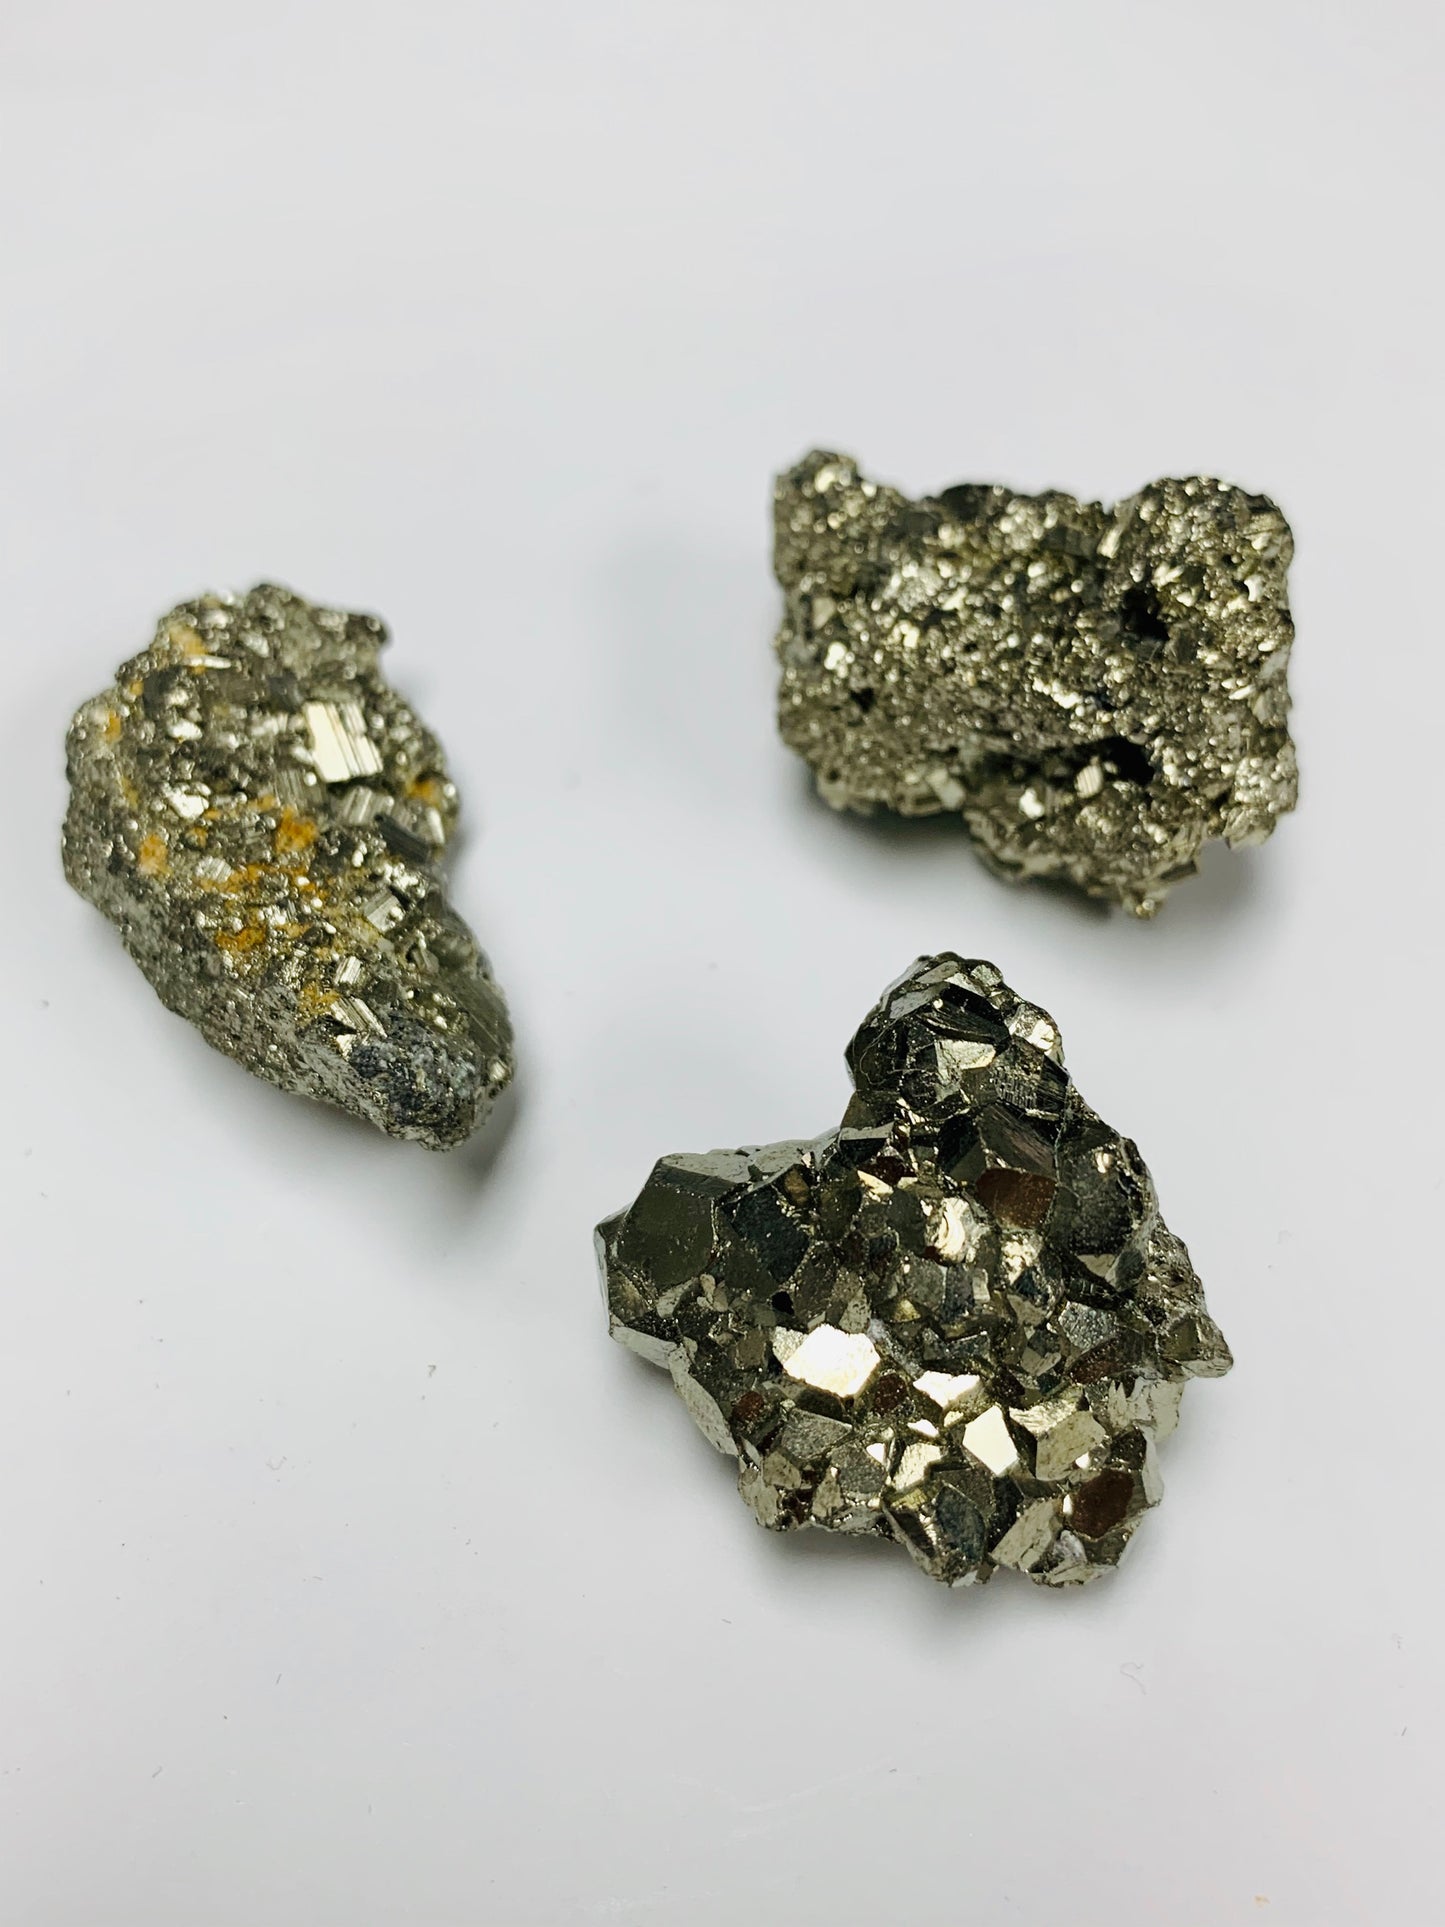 Pyrite- Wealth | Abundance | New Opportunities